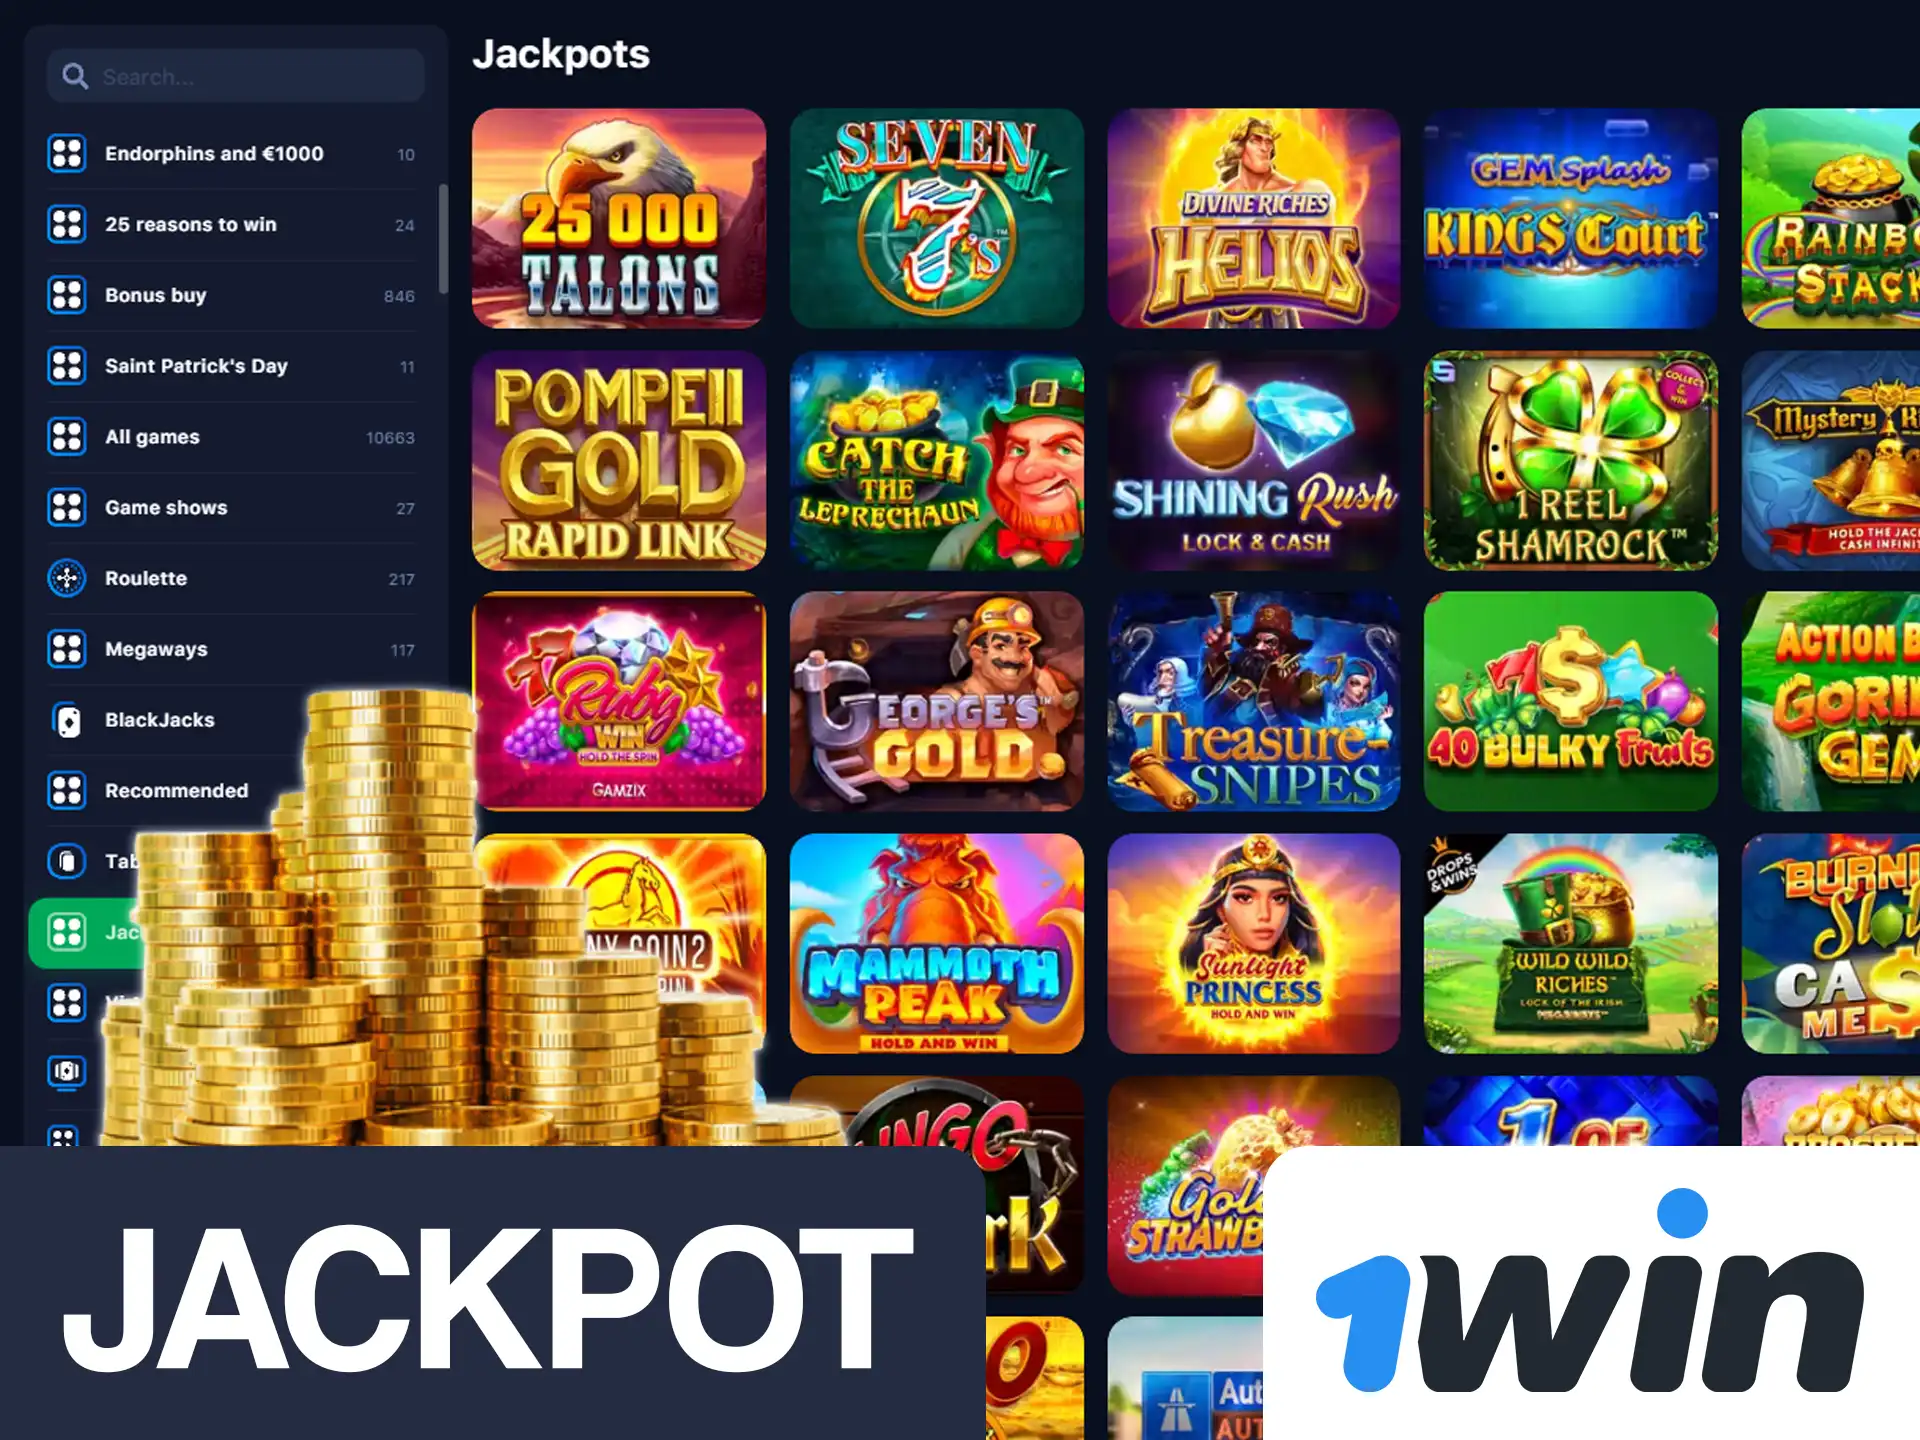 Win huge amounts of money plating jackpot games at 1win.